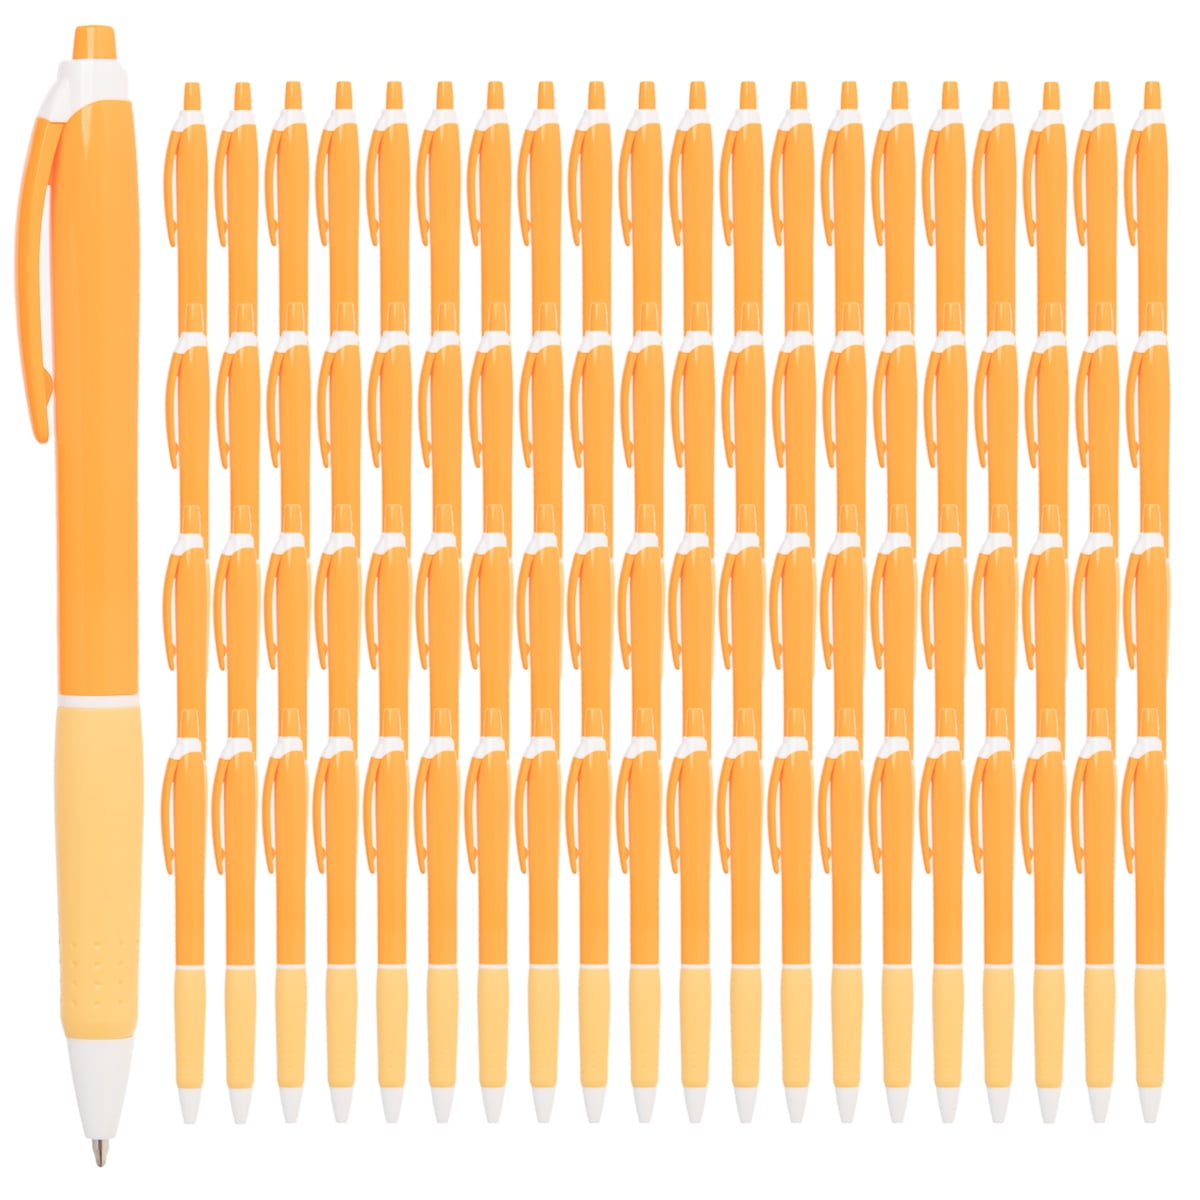 100 Pack Simply Genius Retractable Ballpoint Pens Lot Medium Point Black Ink Pens Bulk Click Pens For Journal Notebook Writing Office Supplies 